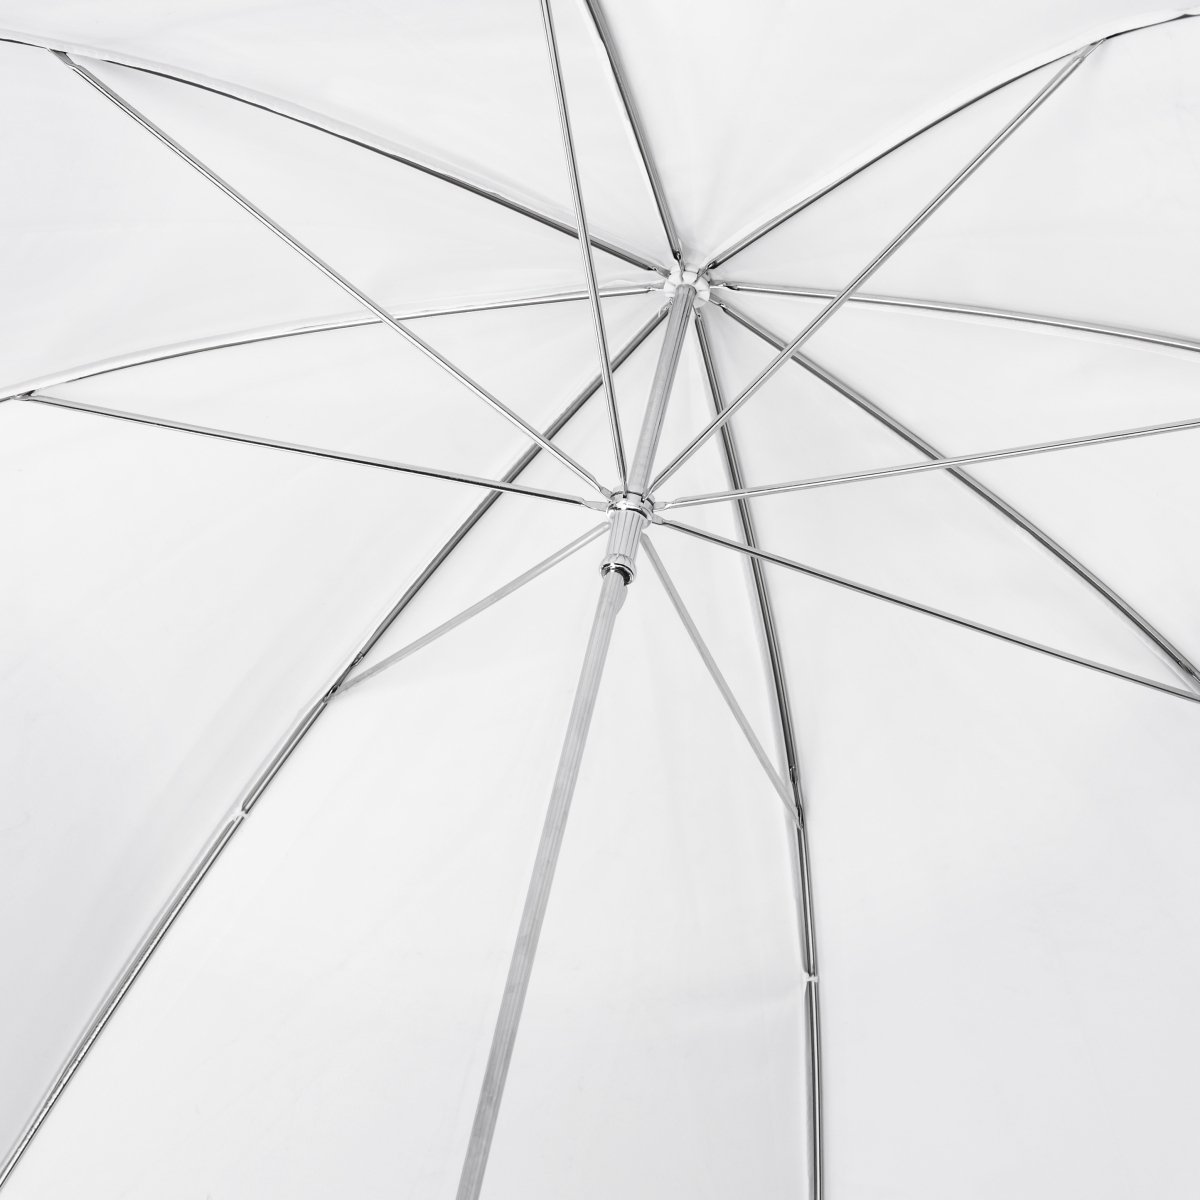 Walimex 2in1 Reflex & Transl. Umbrella white, 84cm